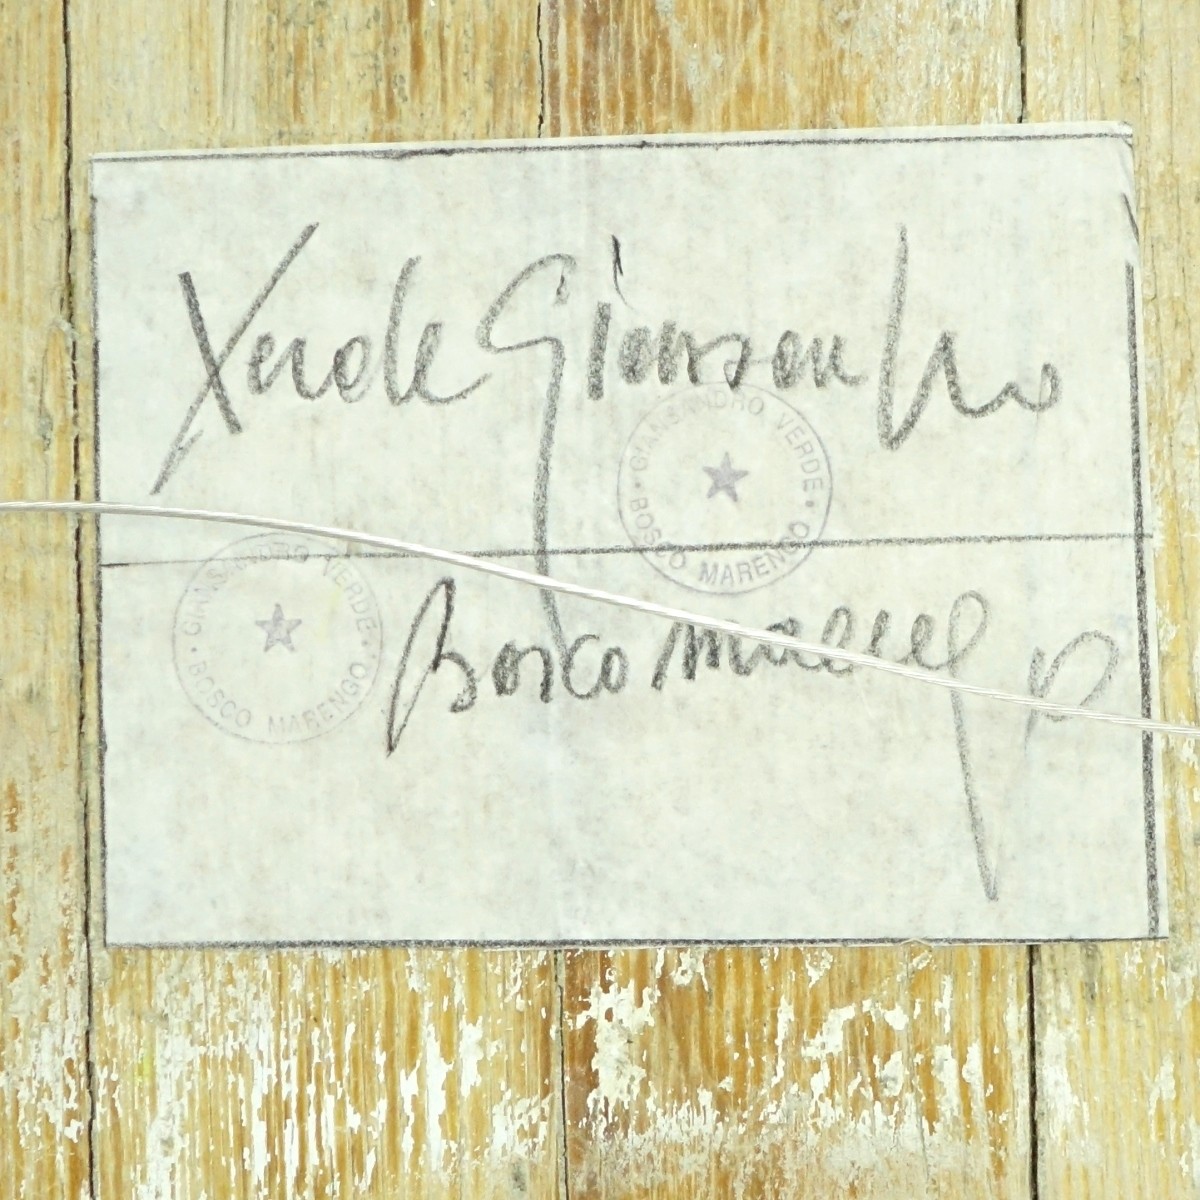 Italian Contemporary Collage Violin signed